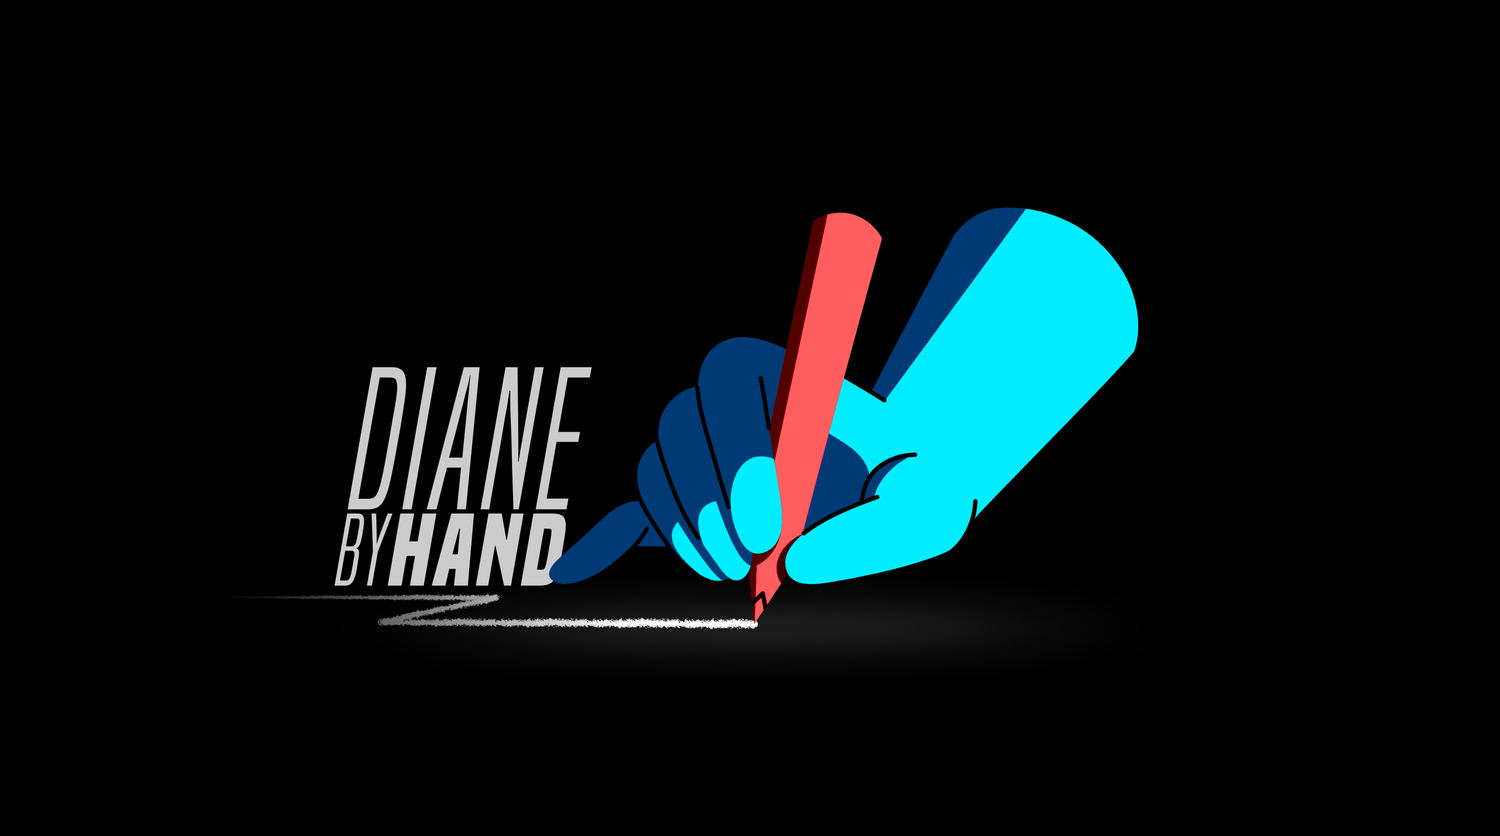 Diane Shaher